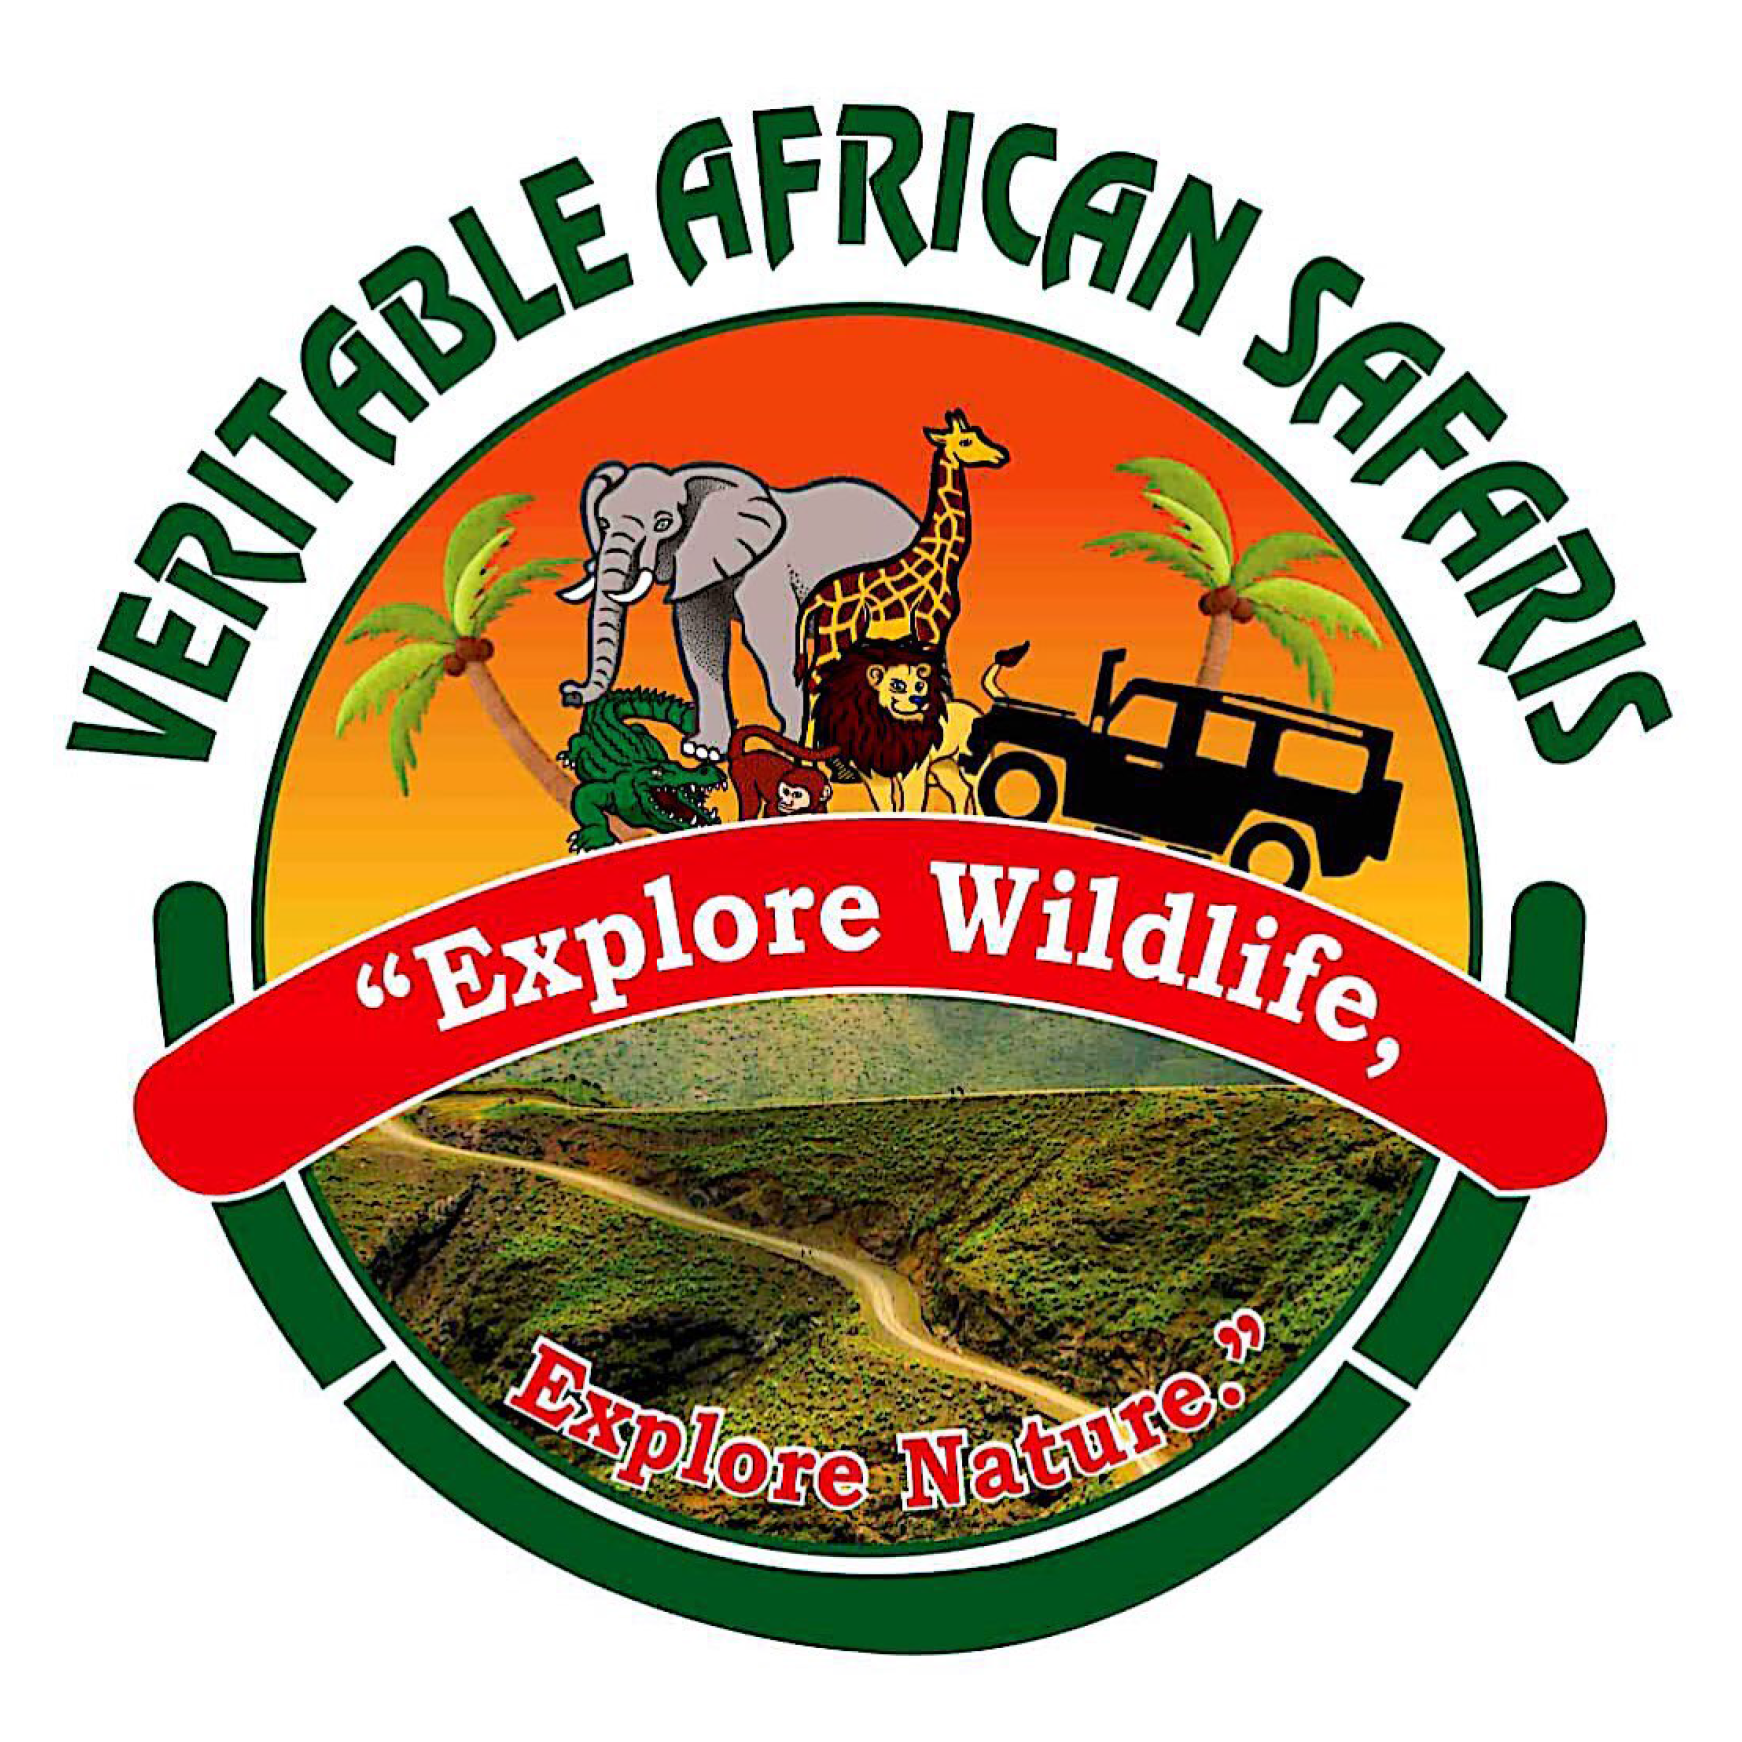 Veritable African Safaris